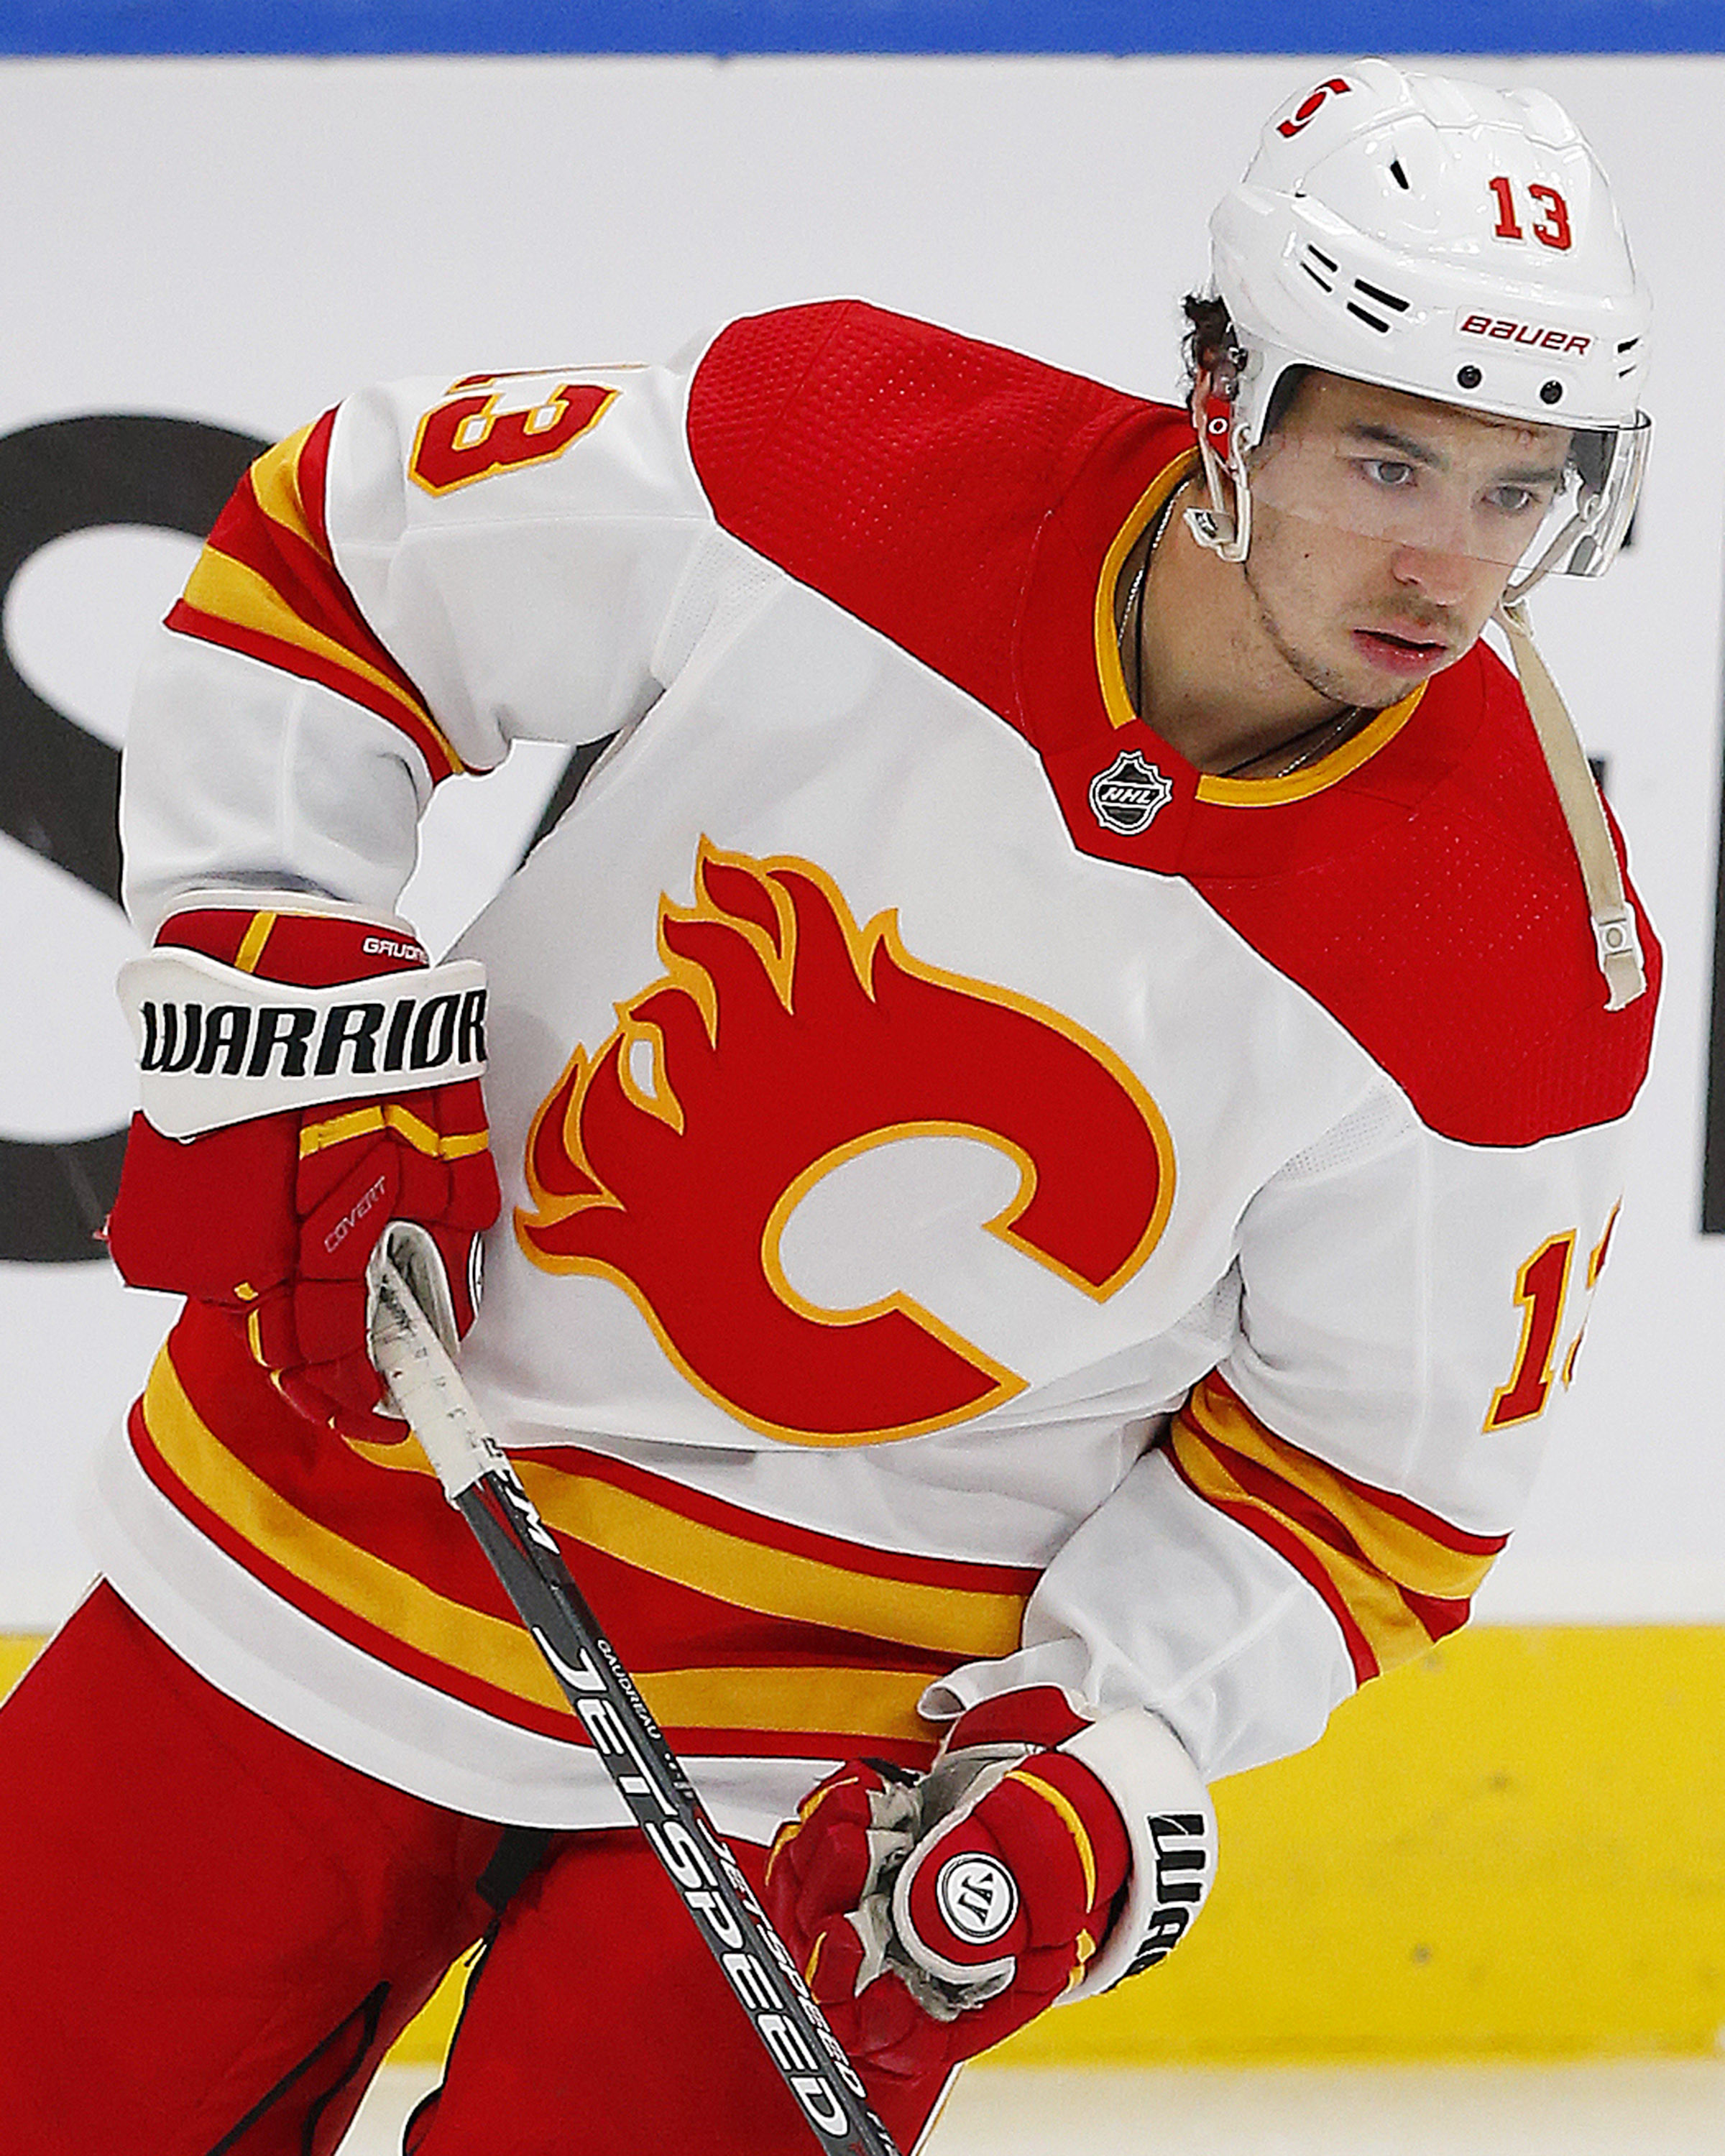 Former Flames star Johnny Gaudreau returns to Calgary's Saddledome